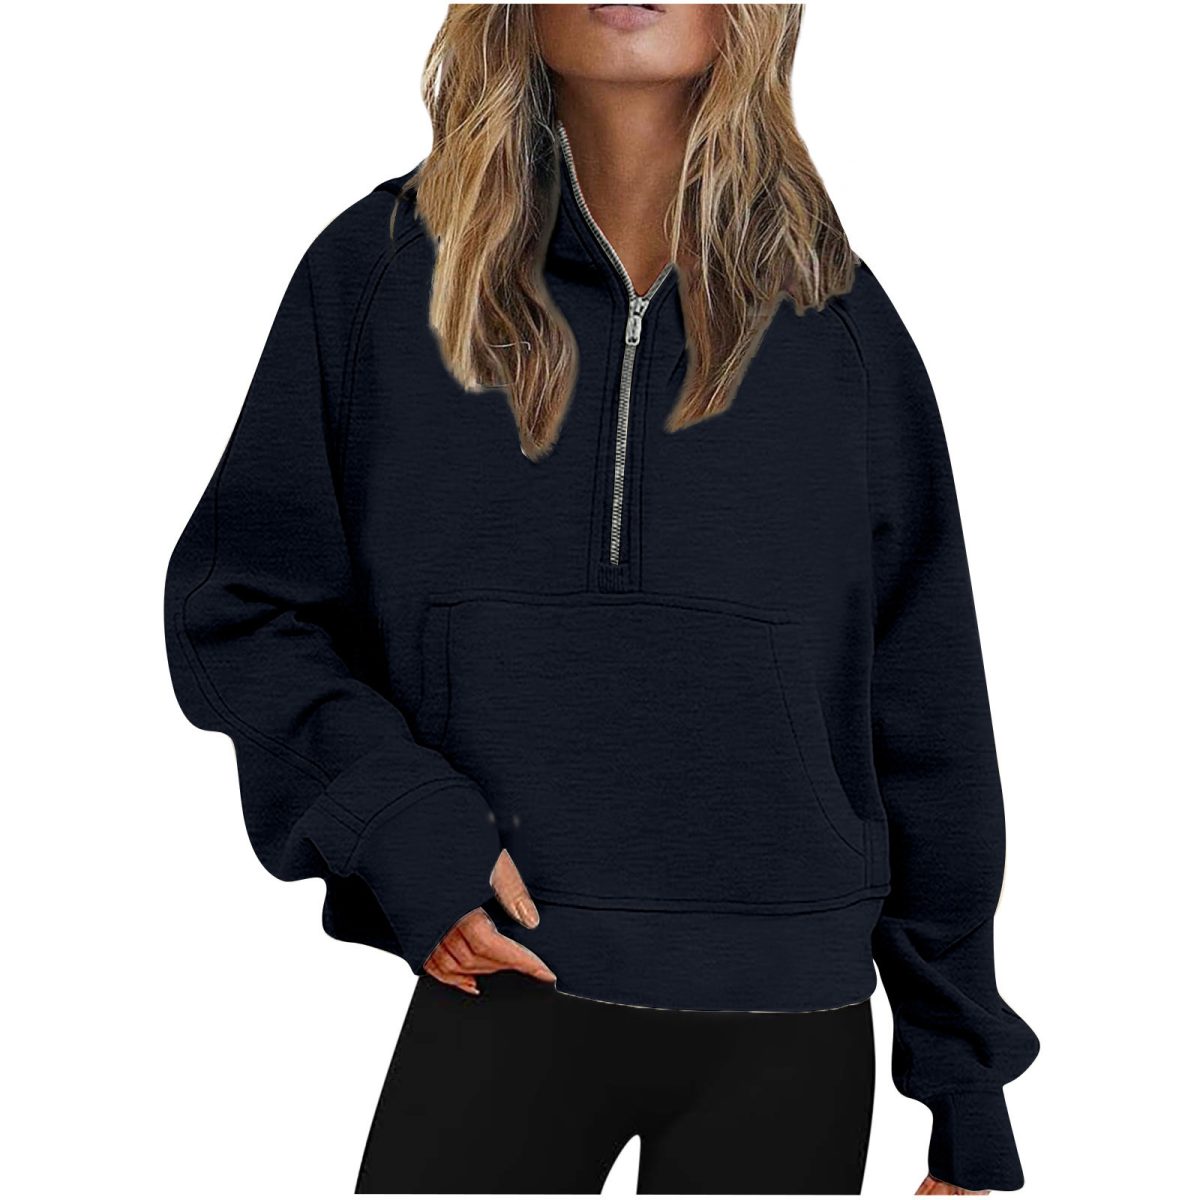 Scuba Sports Half Zipper Loose Short Hood Fleece Lined Sweatshirt - Hoodies & Sweatshirts - Uniqistic.com